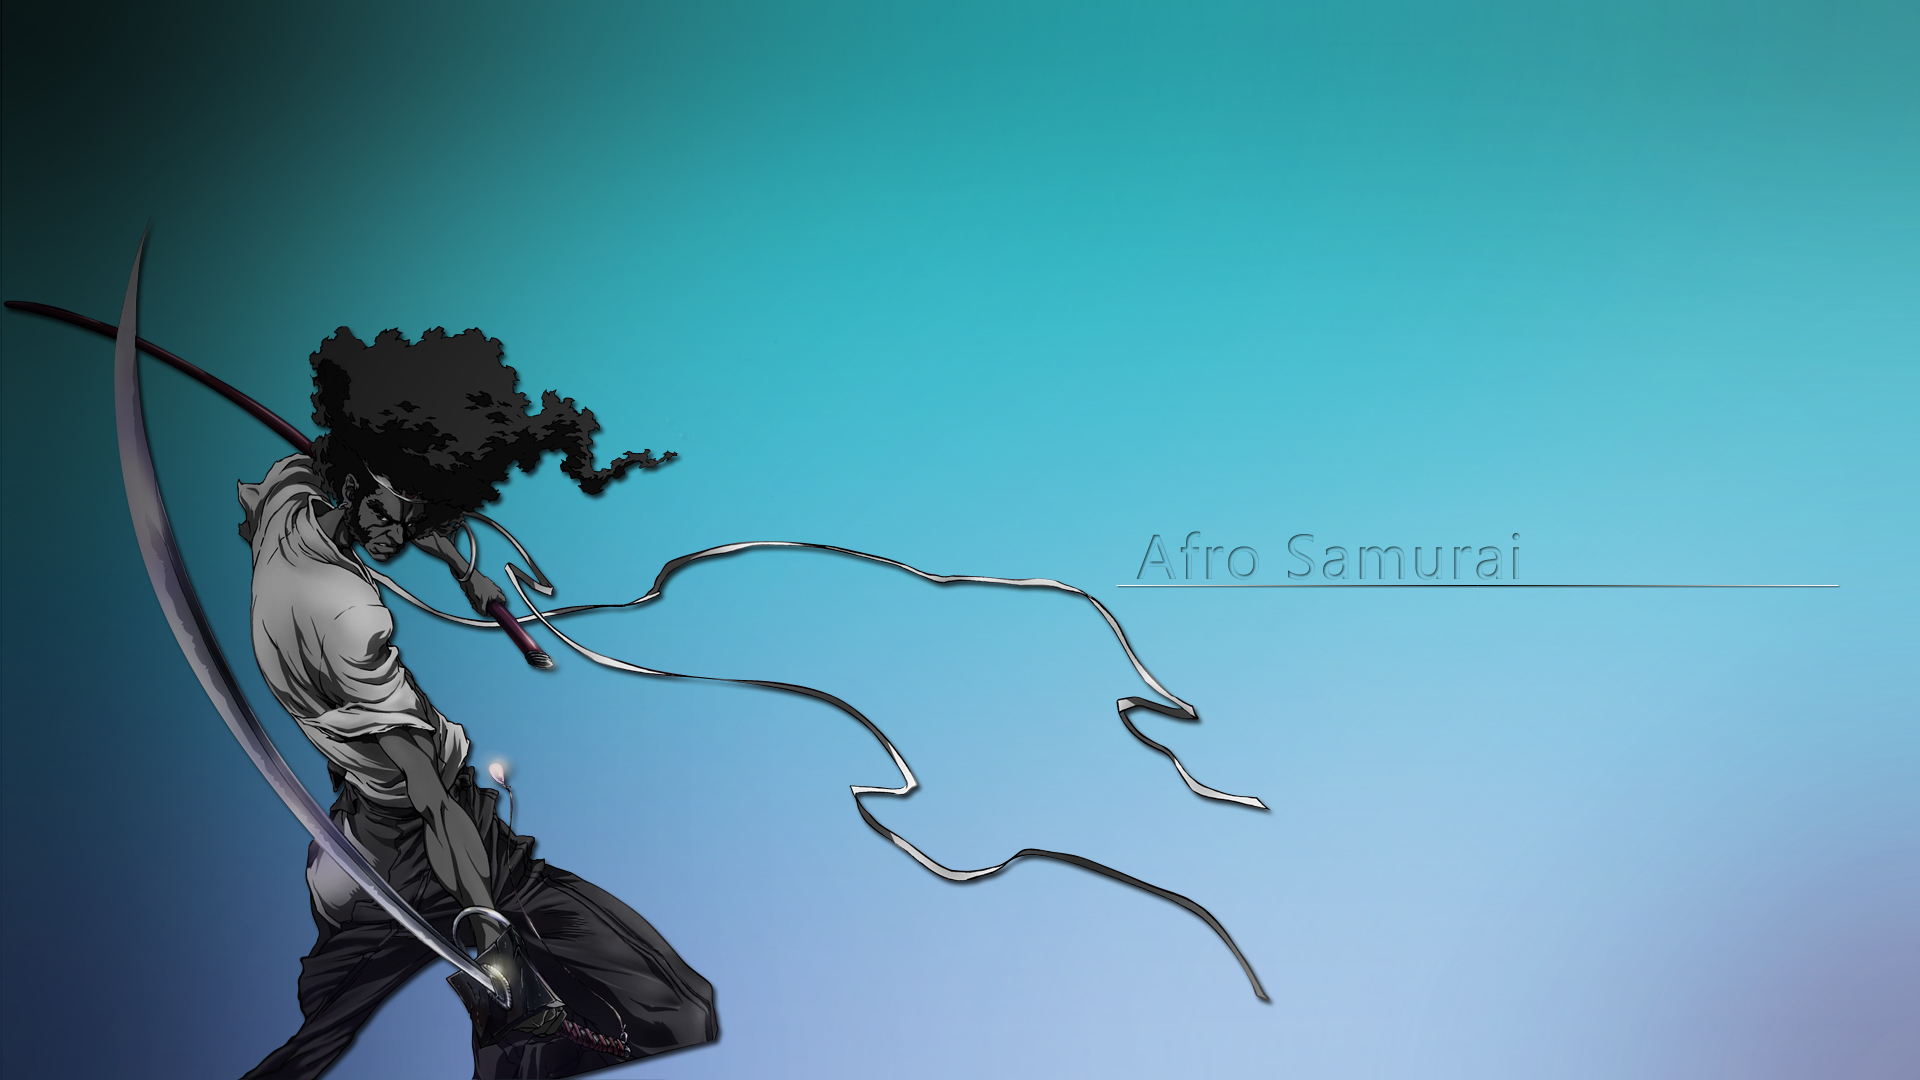 Afro Samurai Anime Poster by Minimalist Anime  Displate